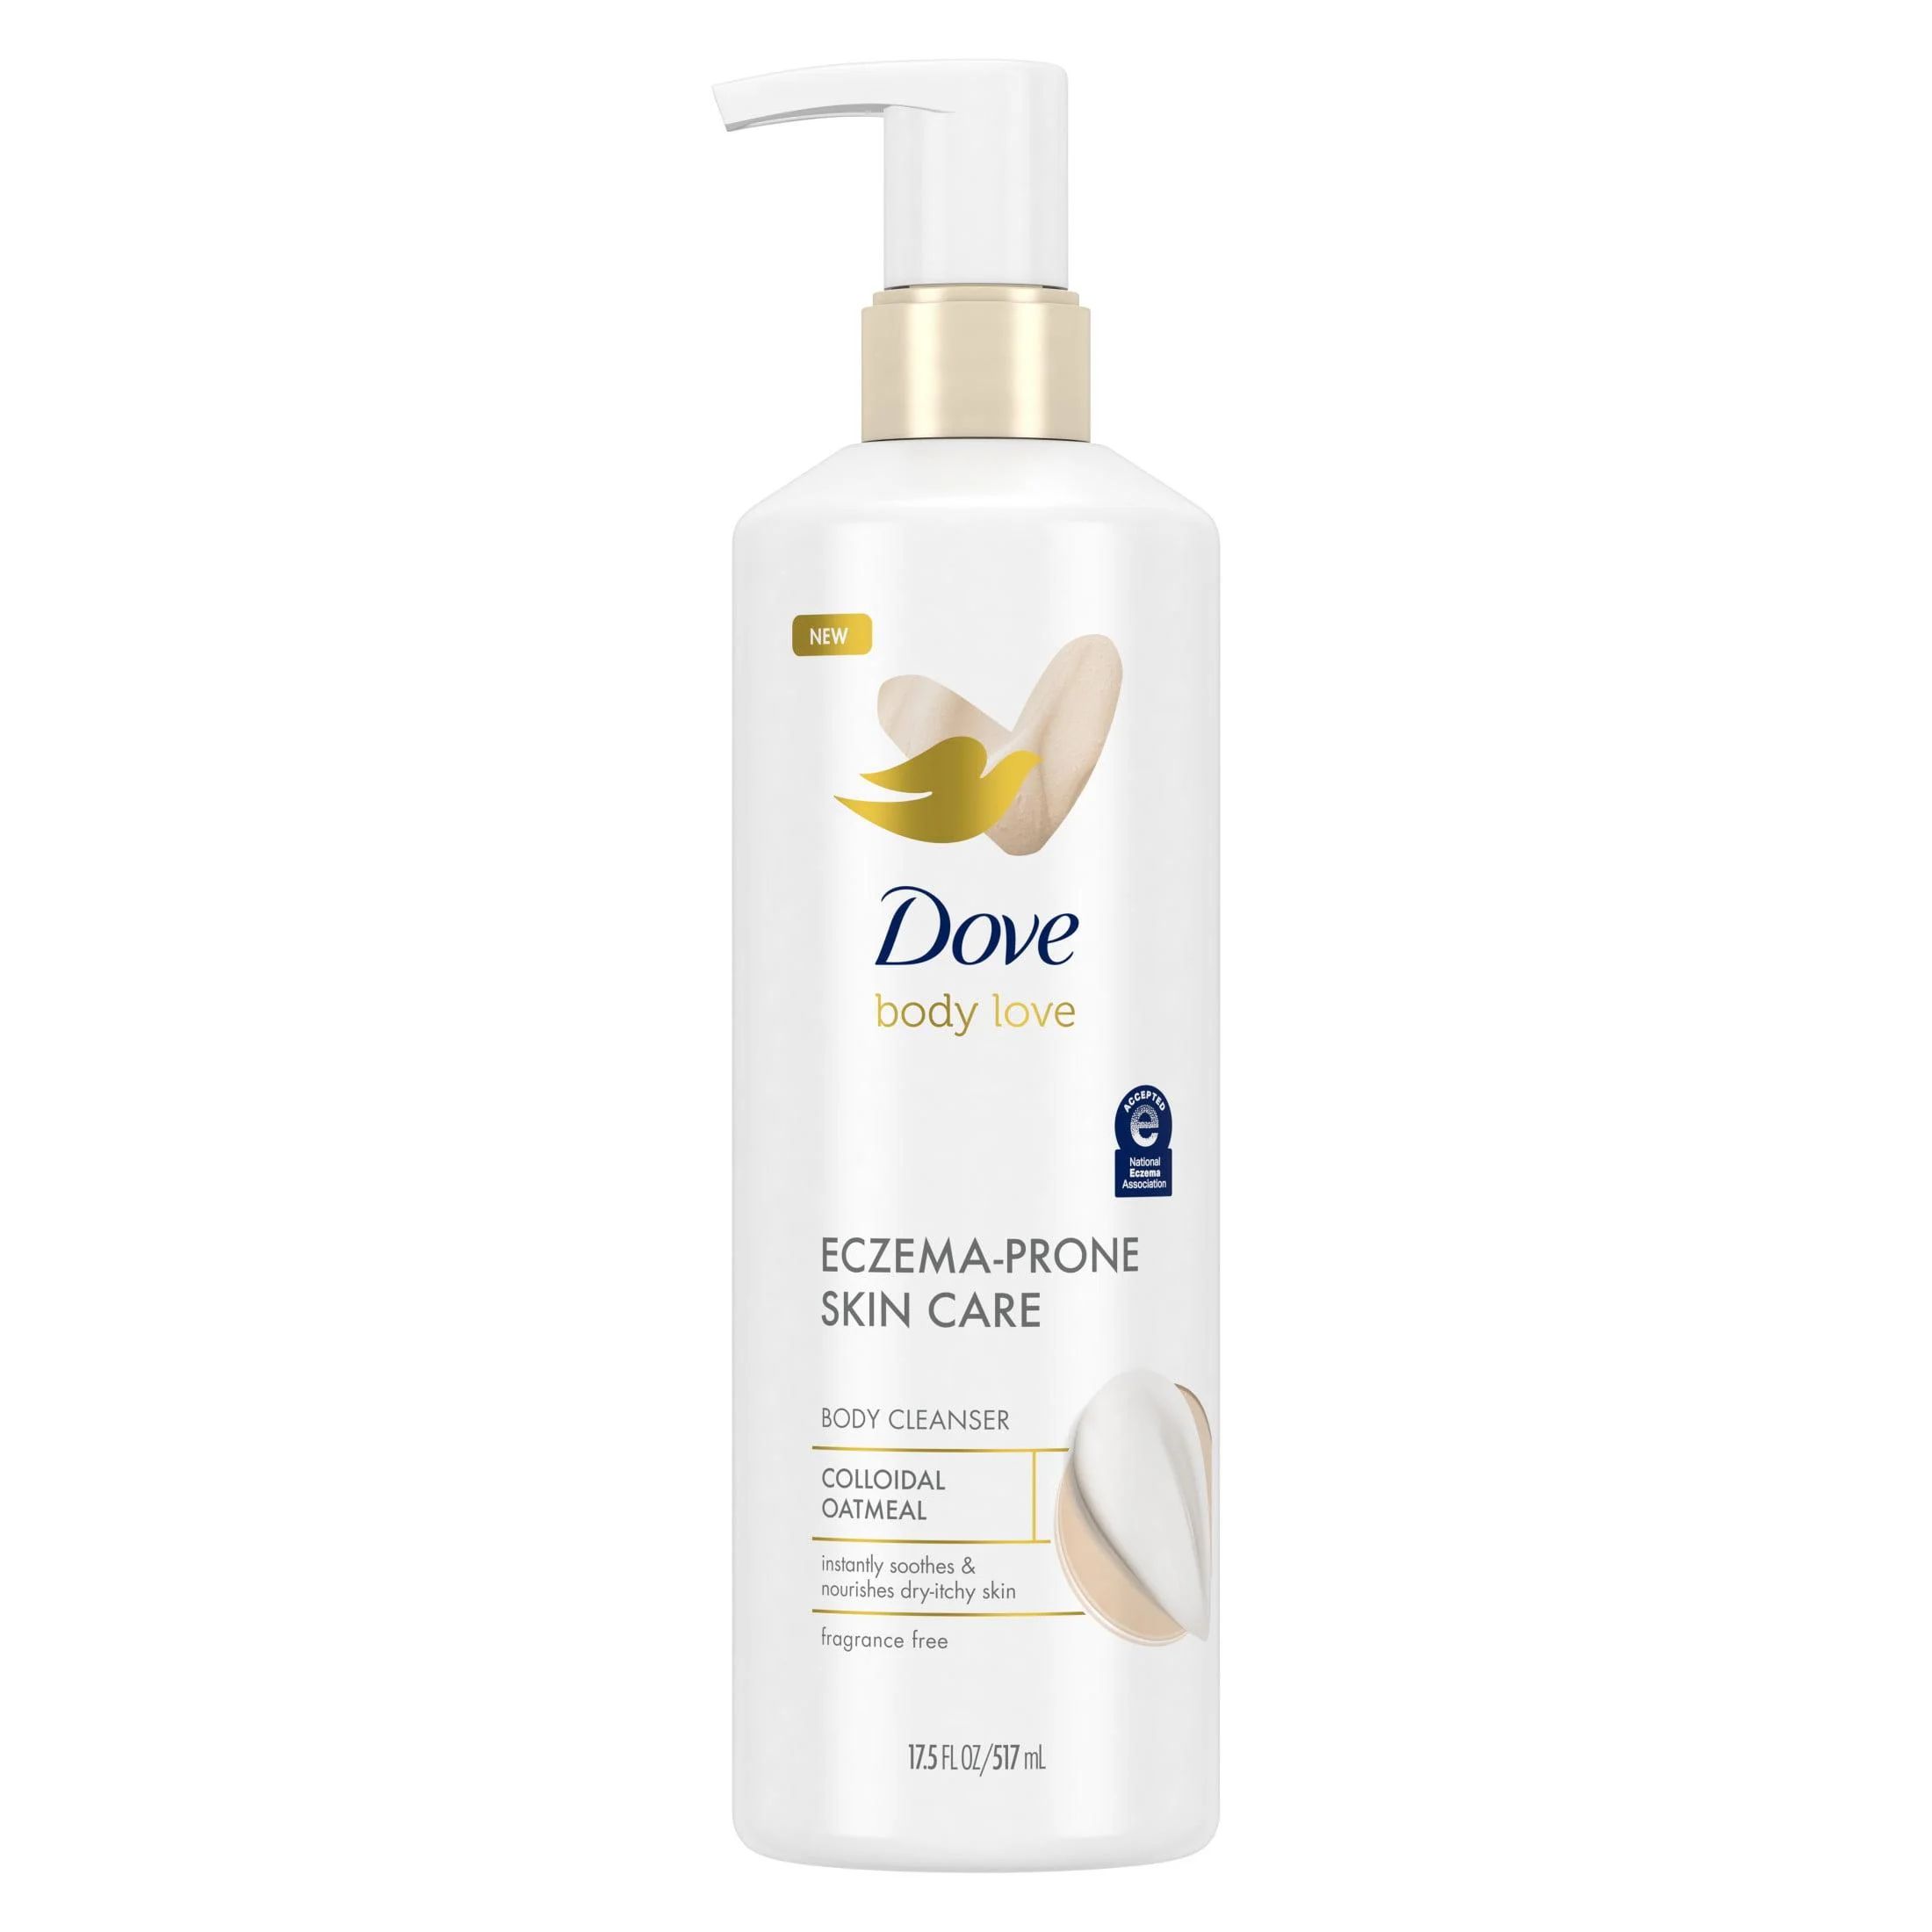 Dove Body Love Eczema Prone Skin Care Daily Use Women's Body Cleanser, Fragrance Free, 17.5 fl oz | Walmart (US)